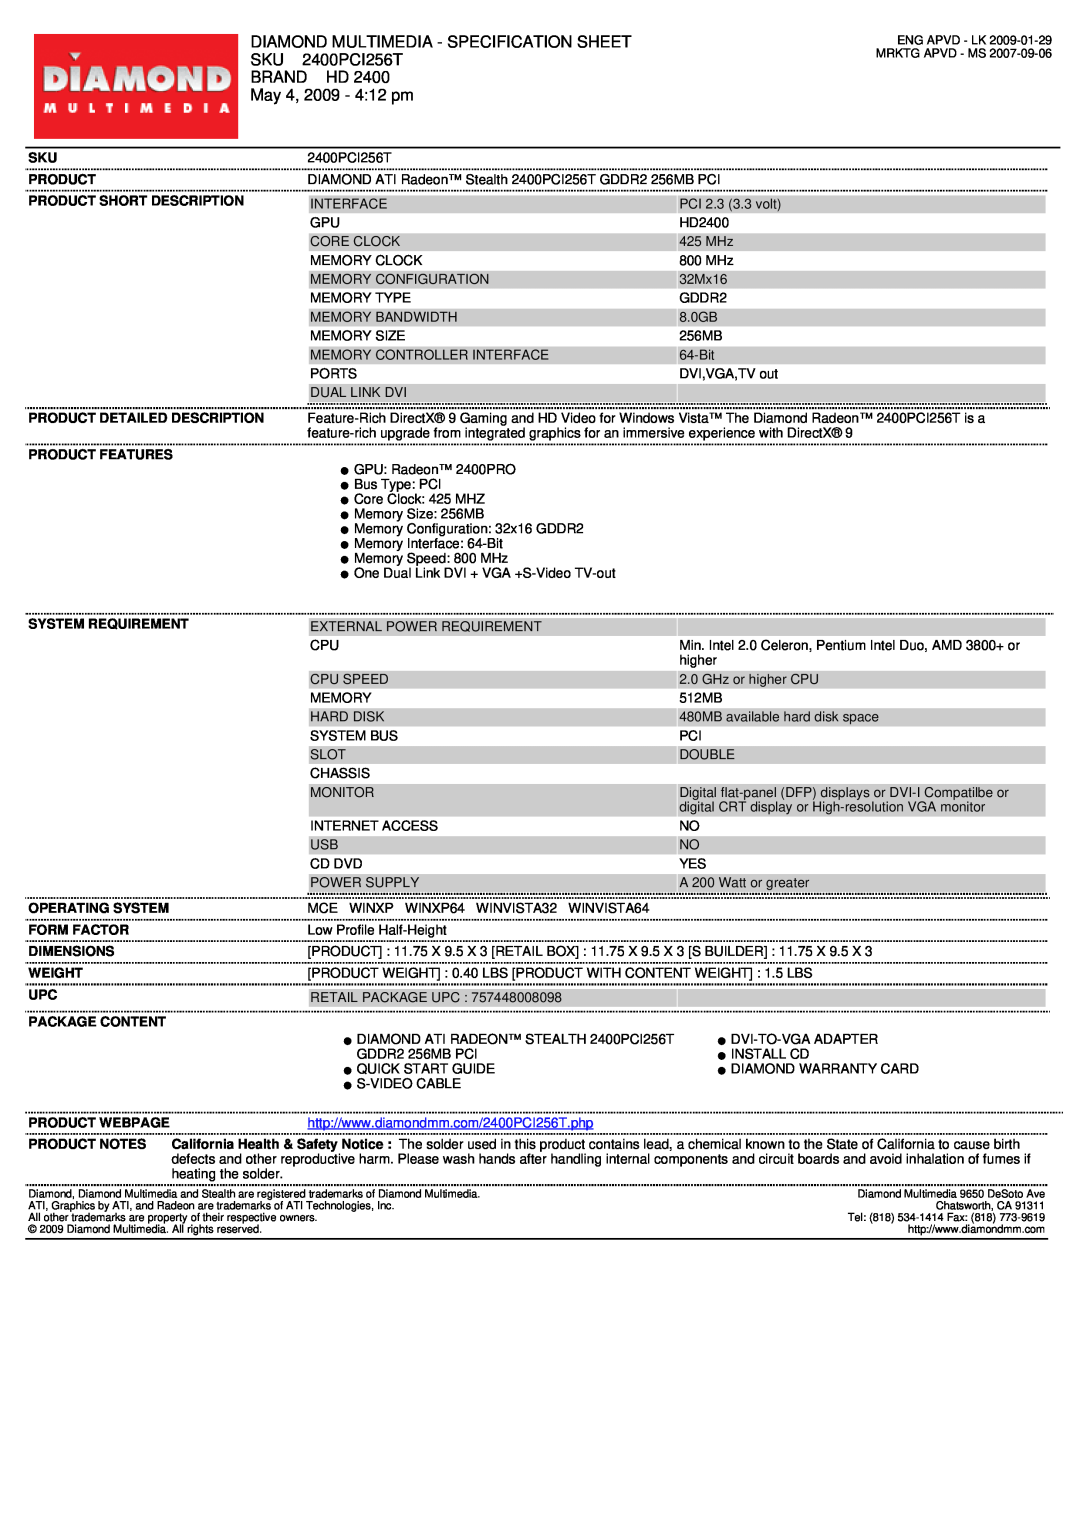 Diamond Multimedia 2400PCI256T specifications Diamond Multimedia - Specification Sheet, Brand Hd, May 4, 2009 - 412 pm 